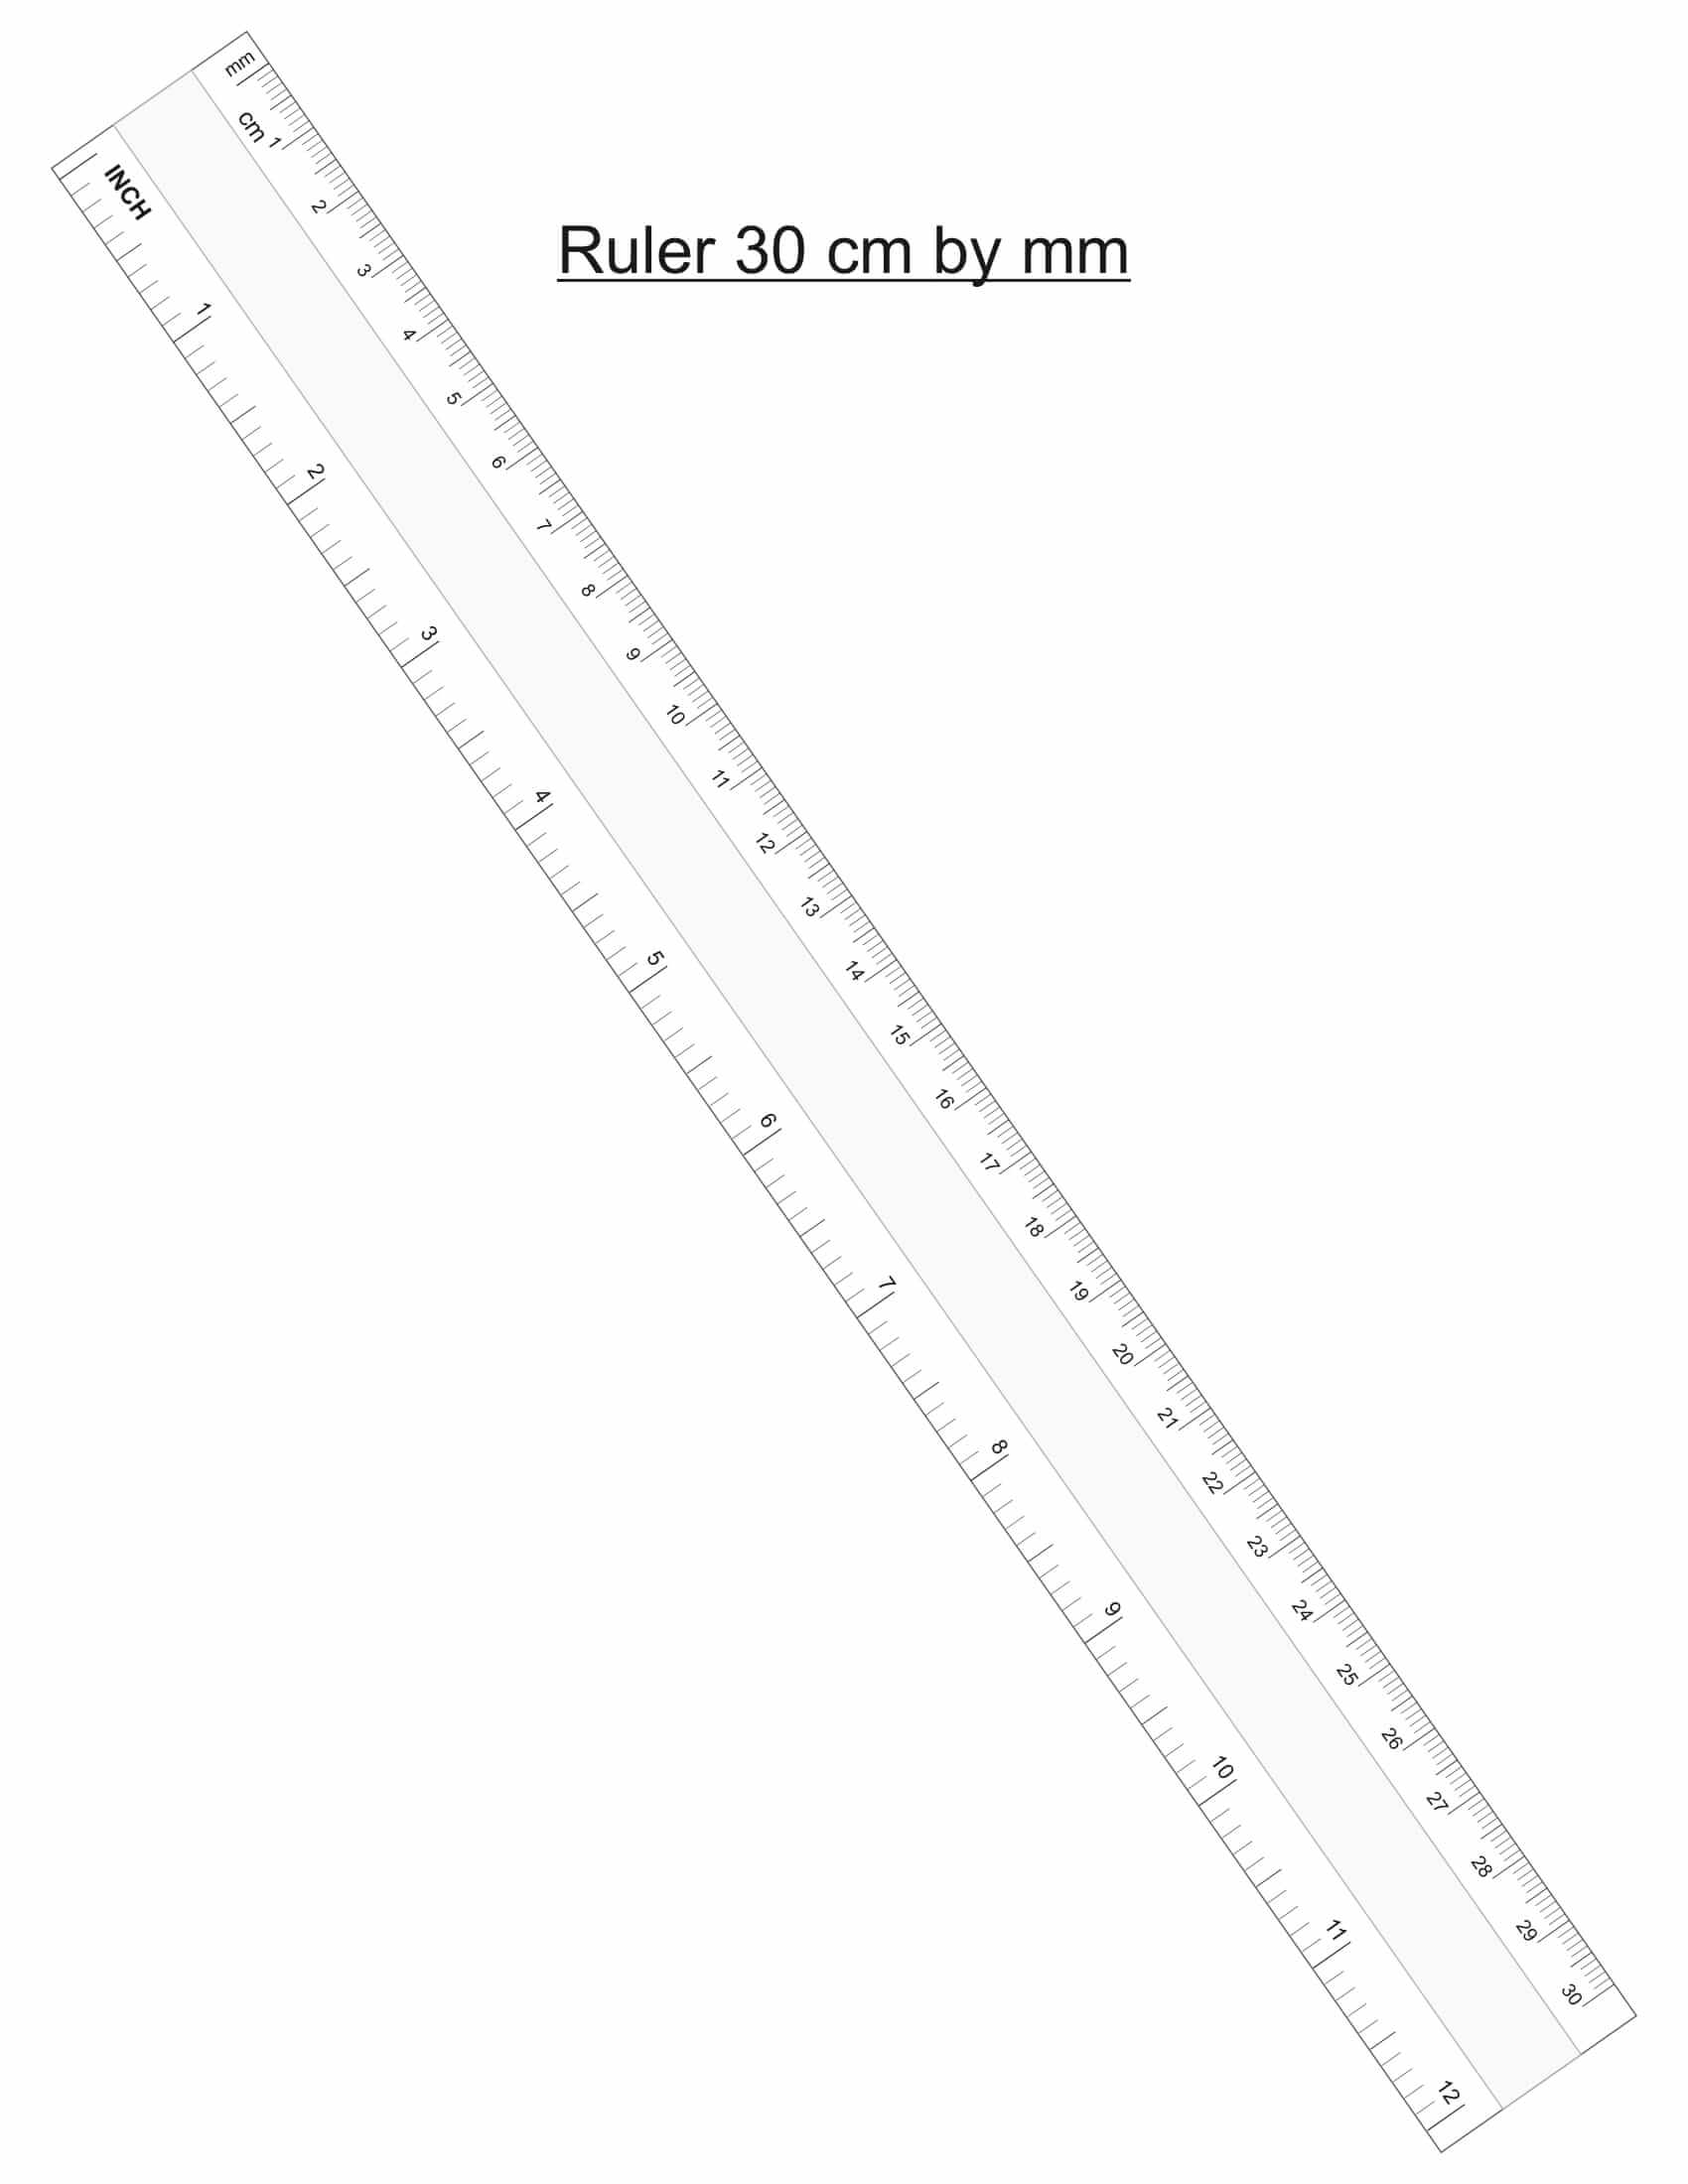 30-cm by mm Ruler - Printable Ruler